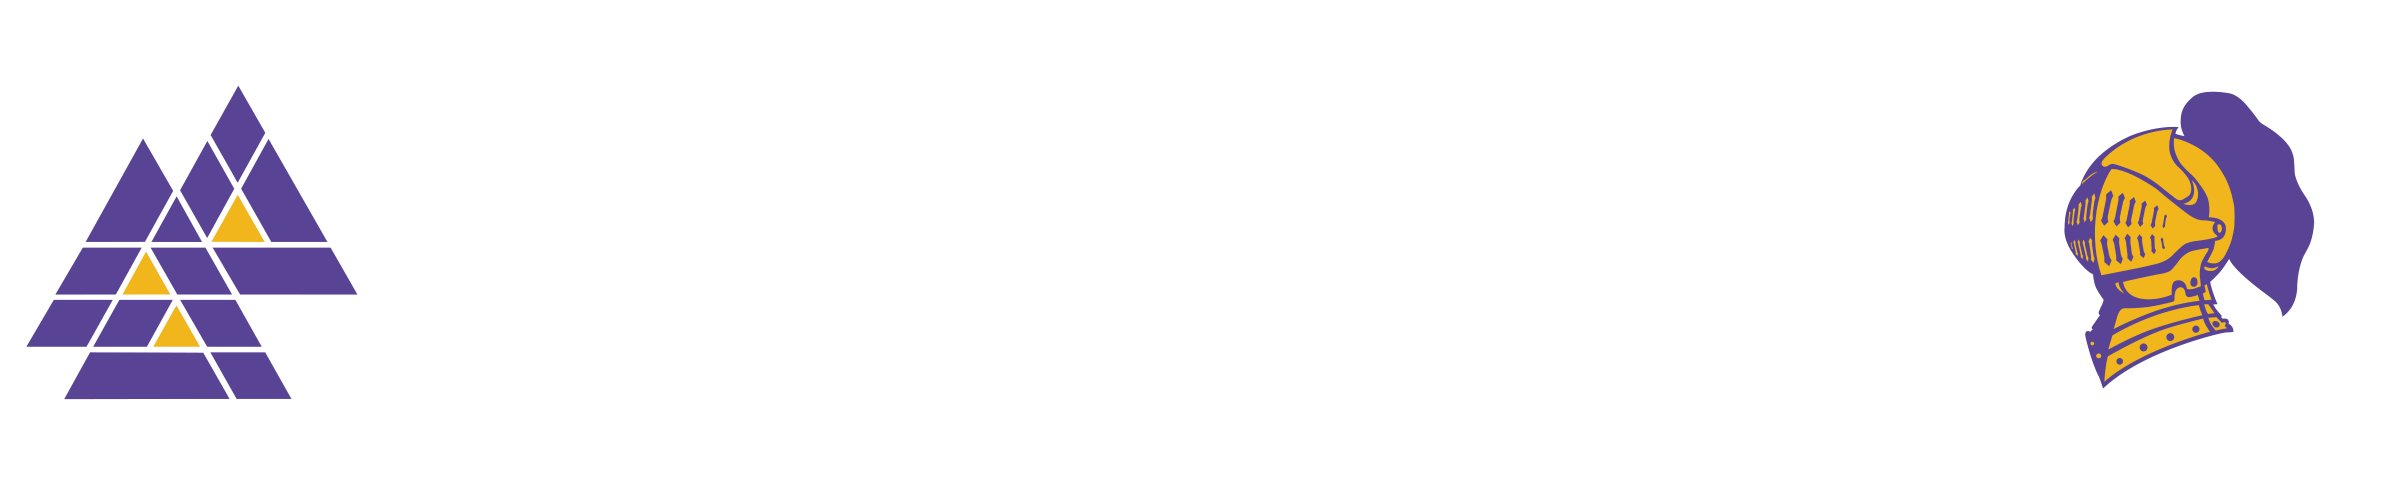 Southwest Chicago Christian Schools